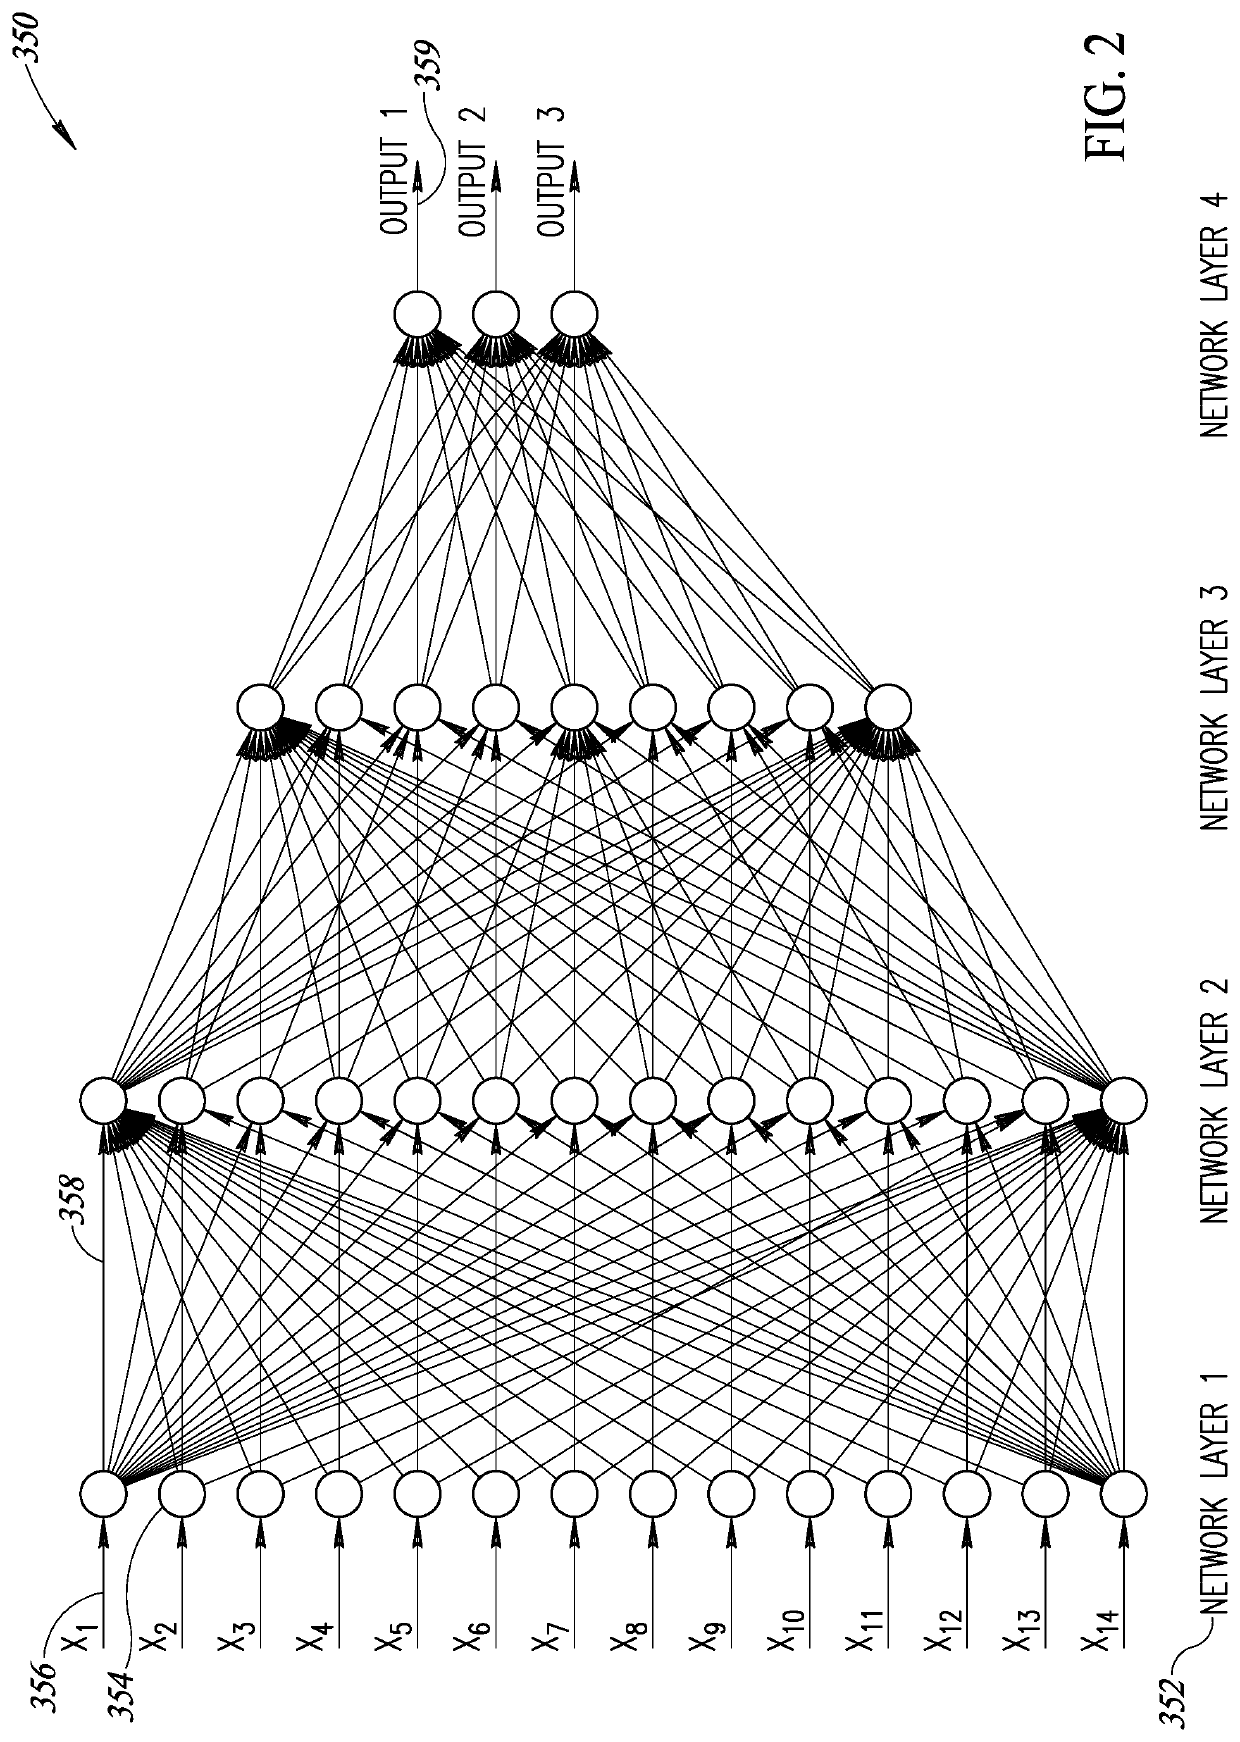 Cluster Interlayer Safety Mechanism In An Artificial Neural Network Processor